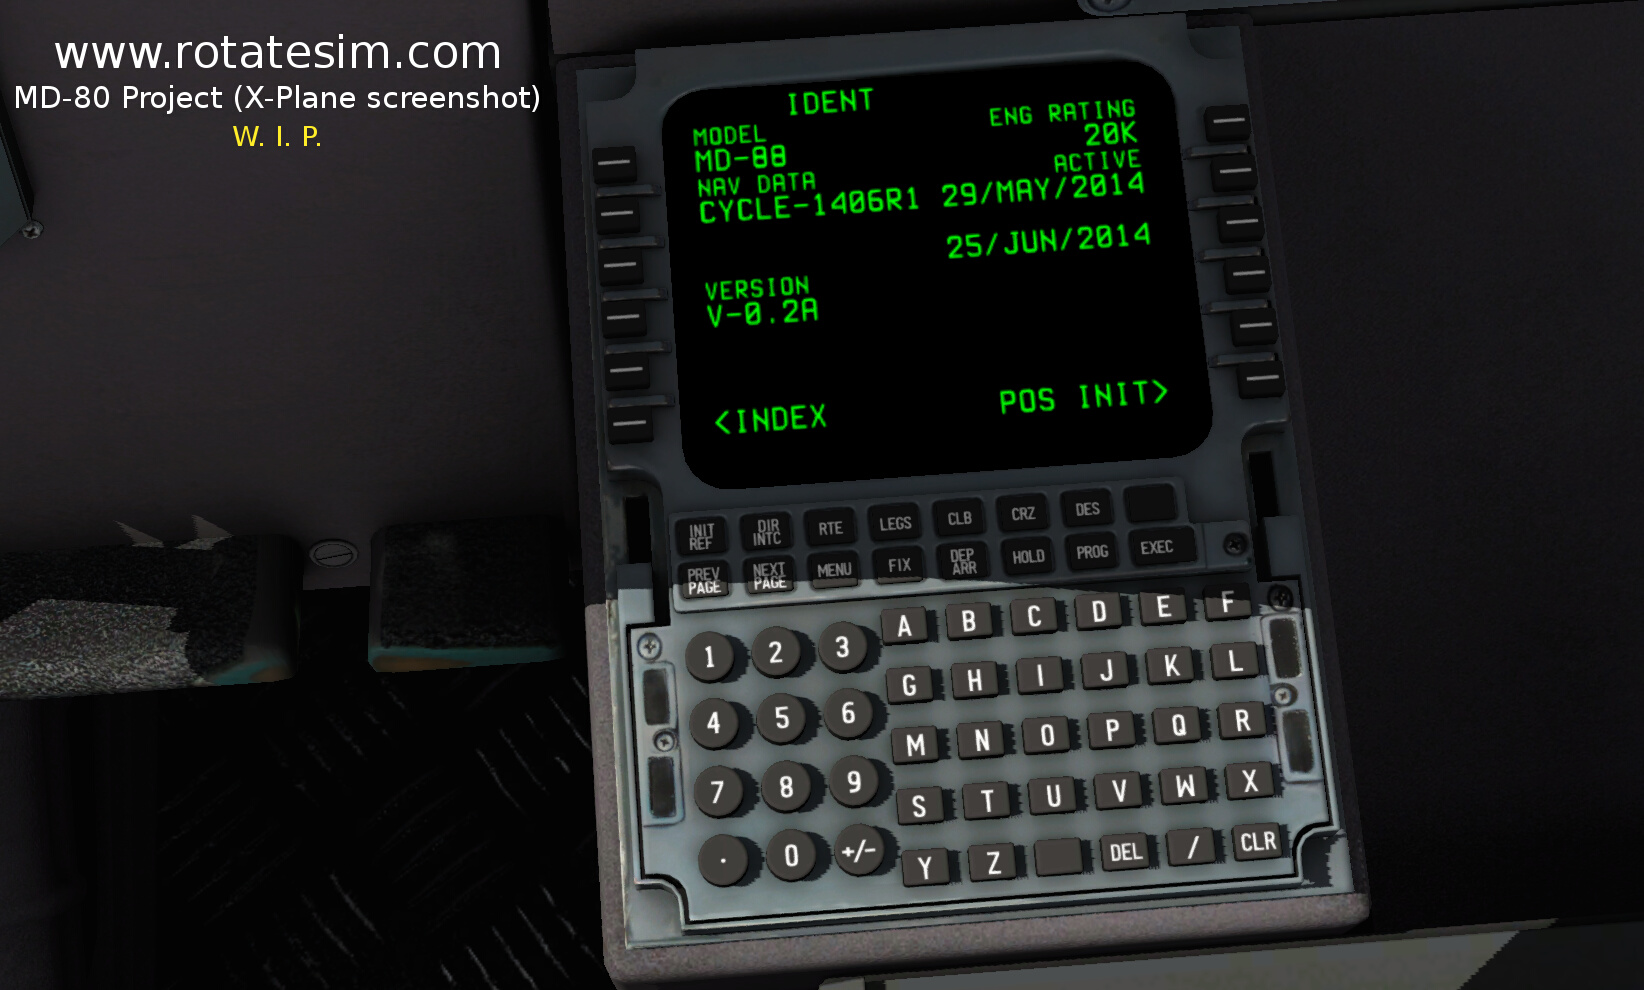 MD-80 screenshot FMC 01 IDENT